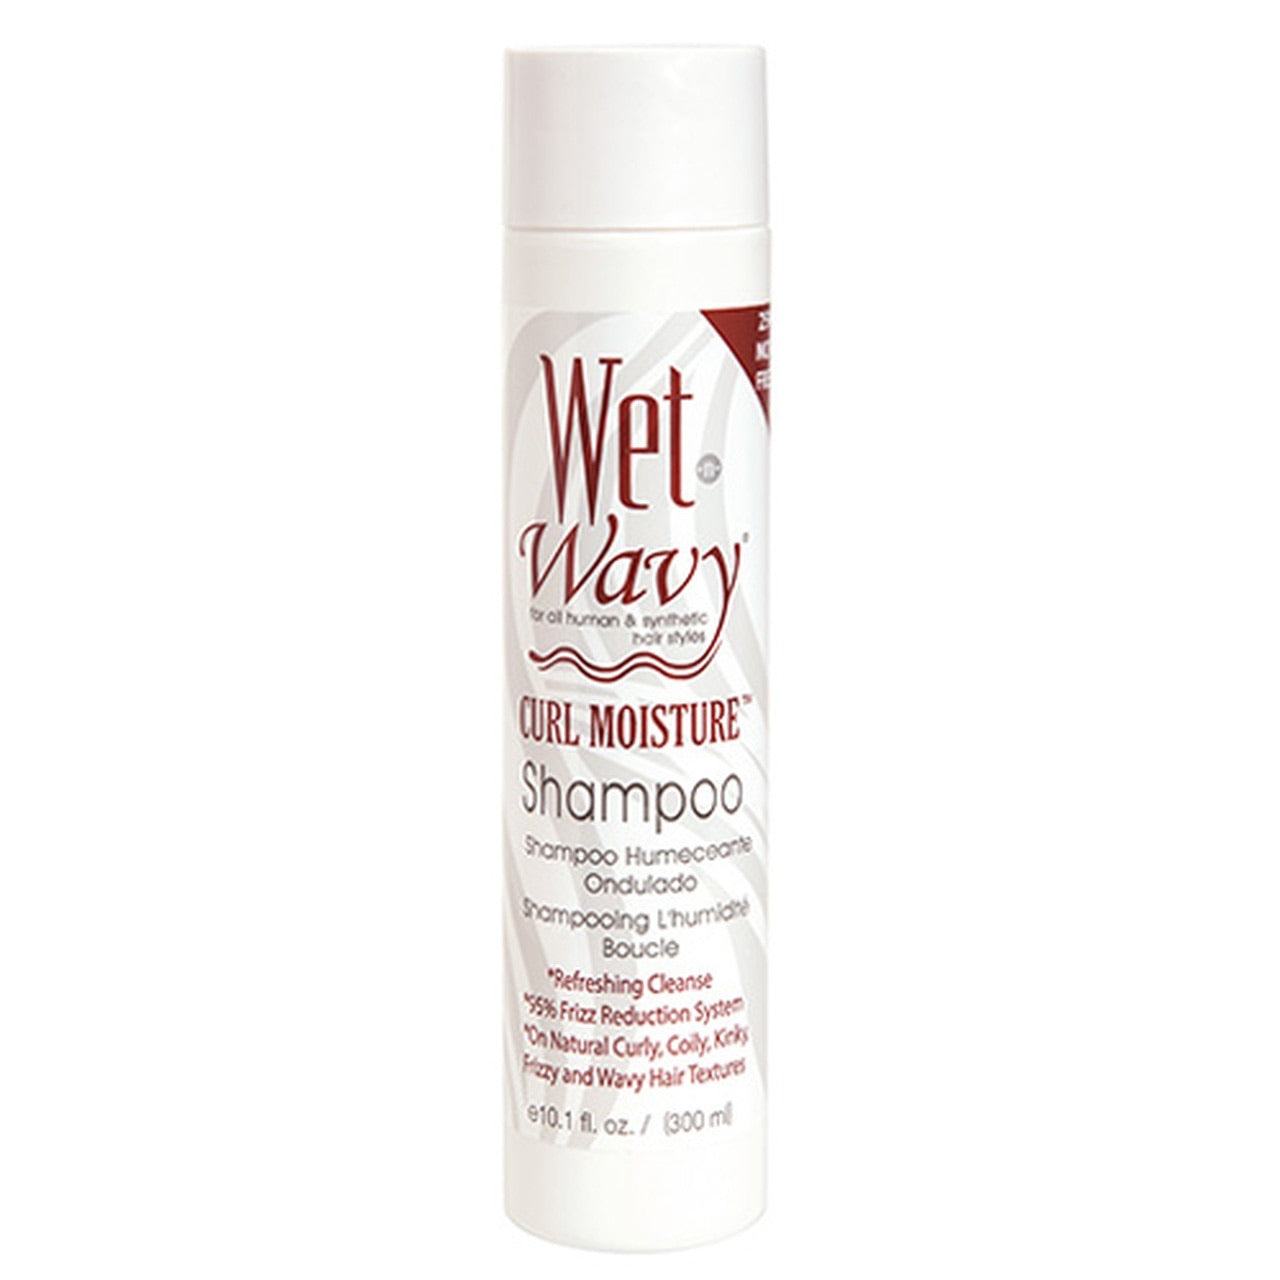 Wet wavy curl moisture shampoo 10.1oz